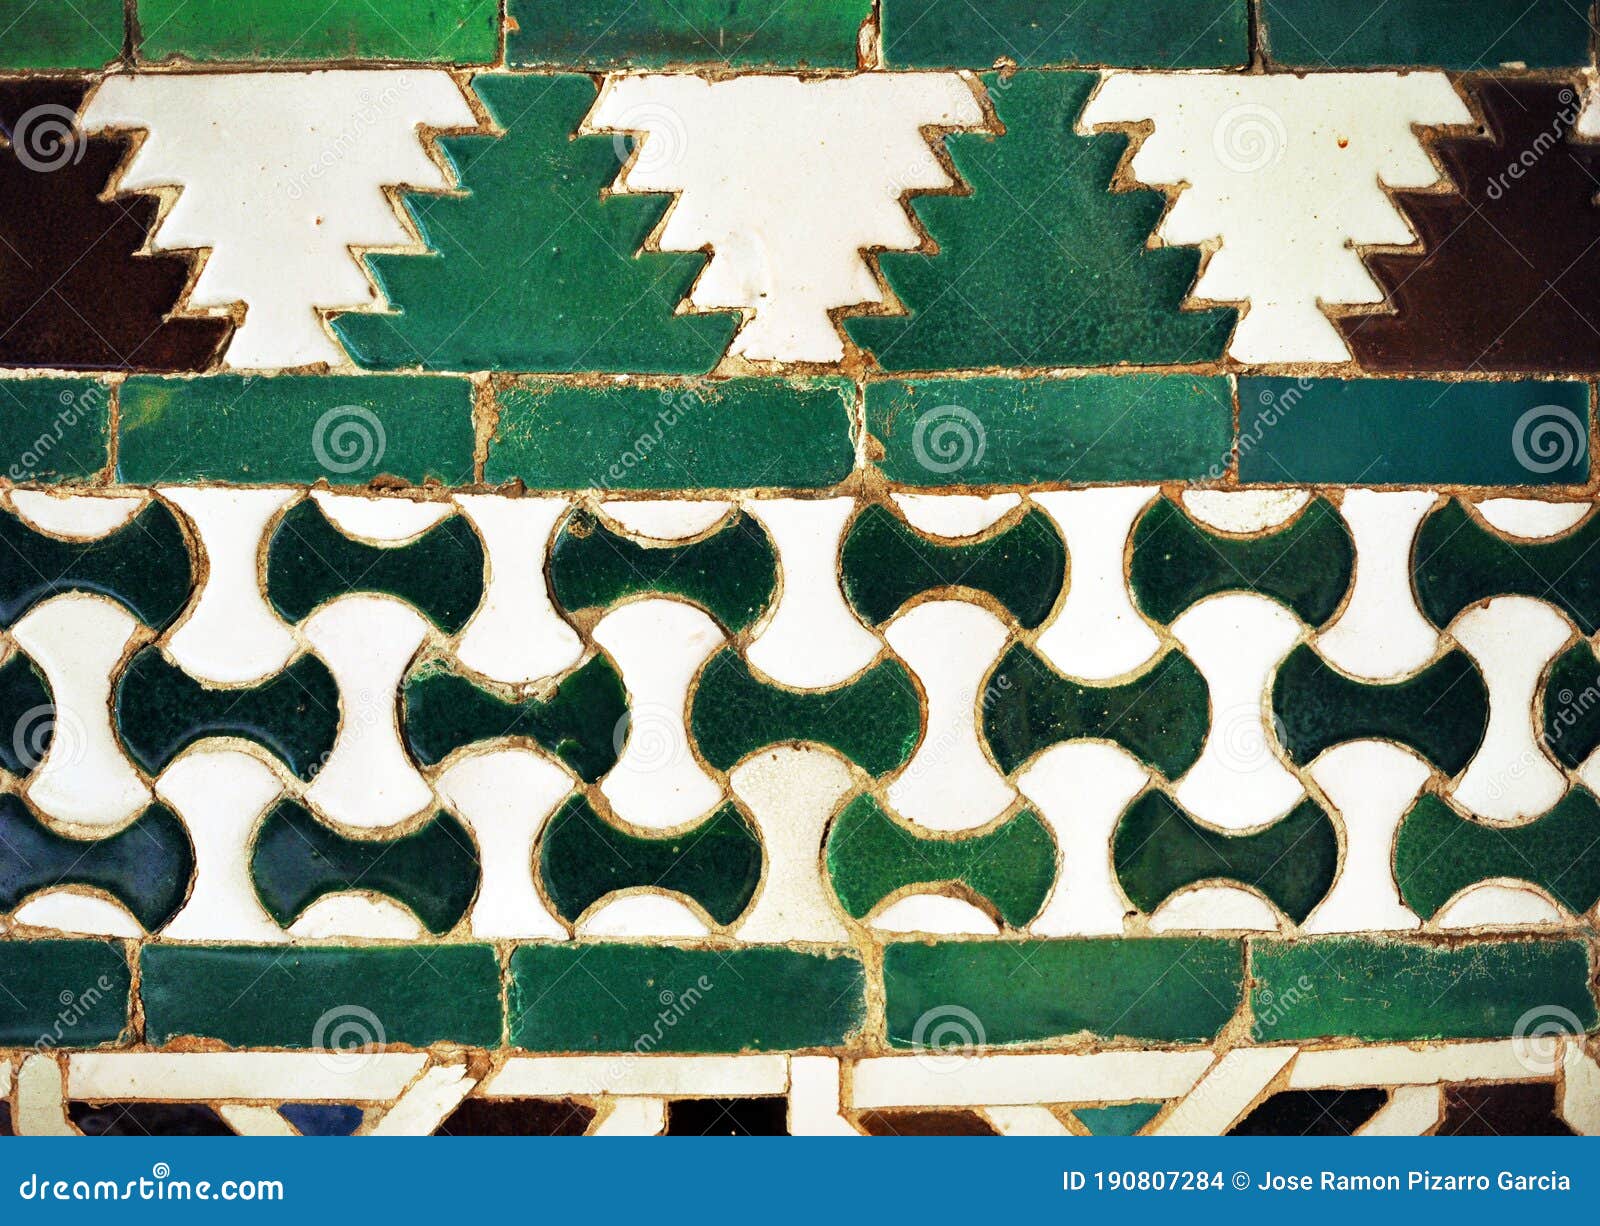 tiles of al andalus alcazar of seville spain. arab pattern decoration